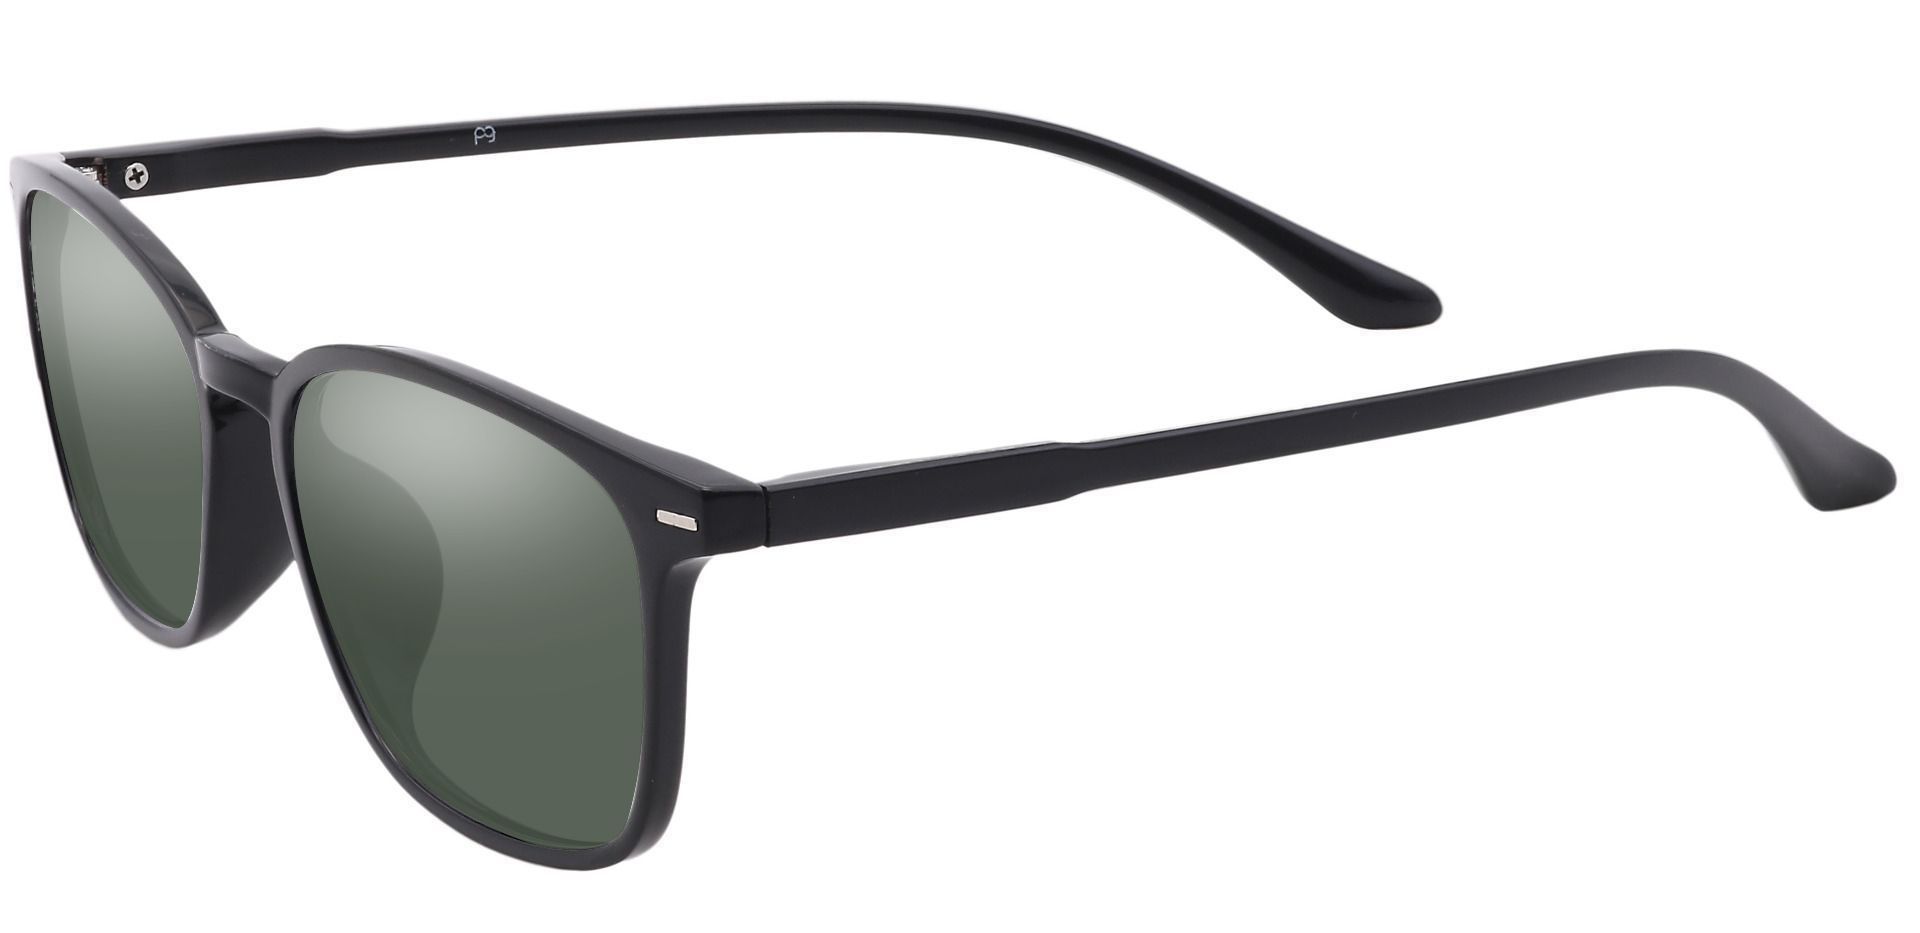 Cabo Oval Prescription Sunglasses - Black Frame With Green Lenses